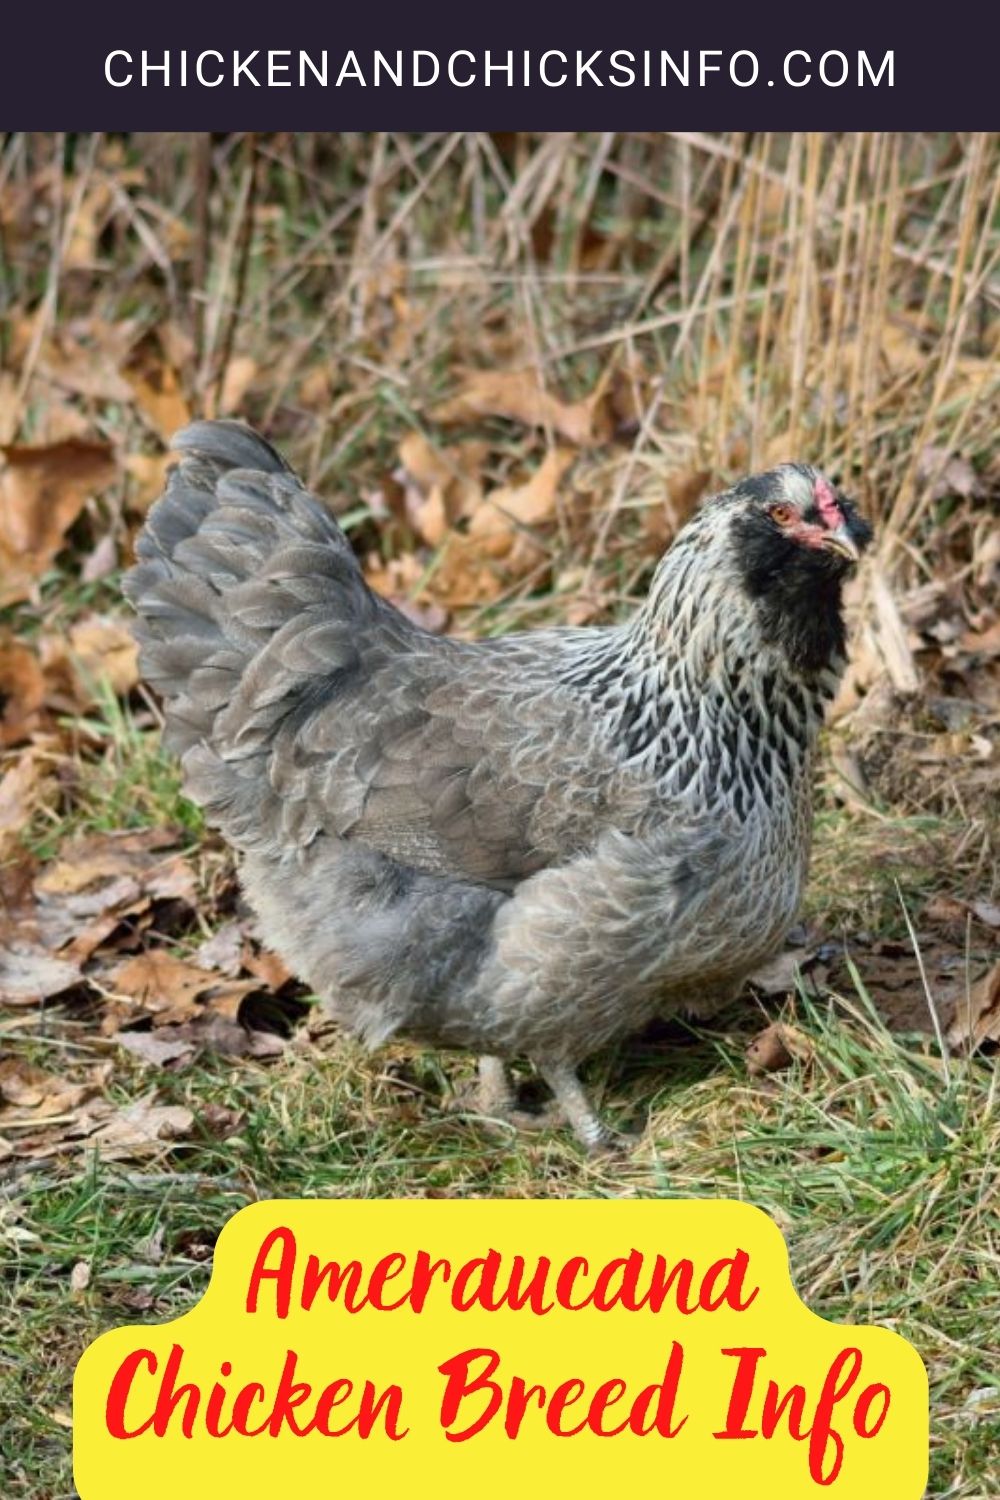 Ameraucana Chicken Breed Info Pinterest image.